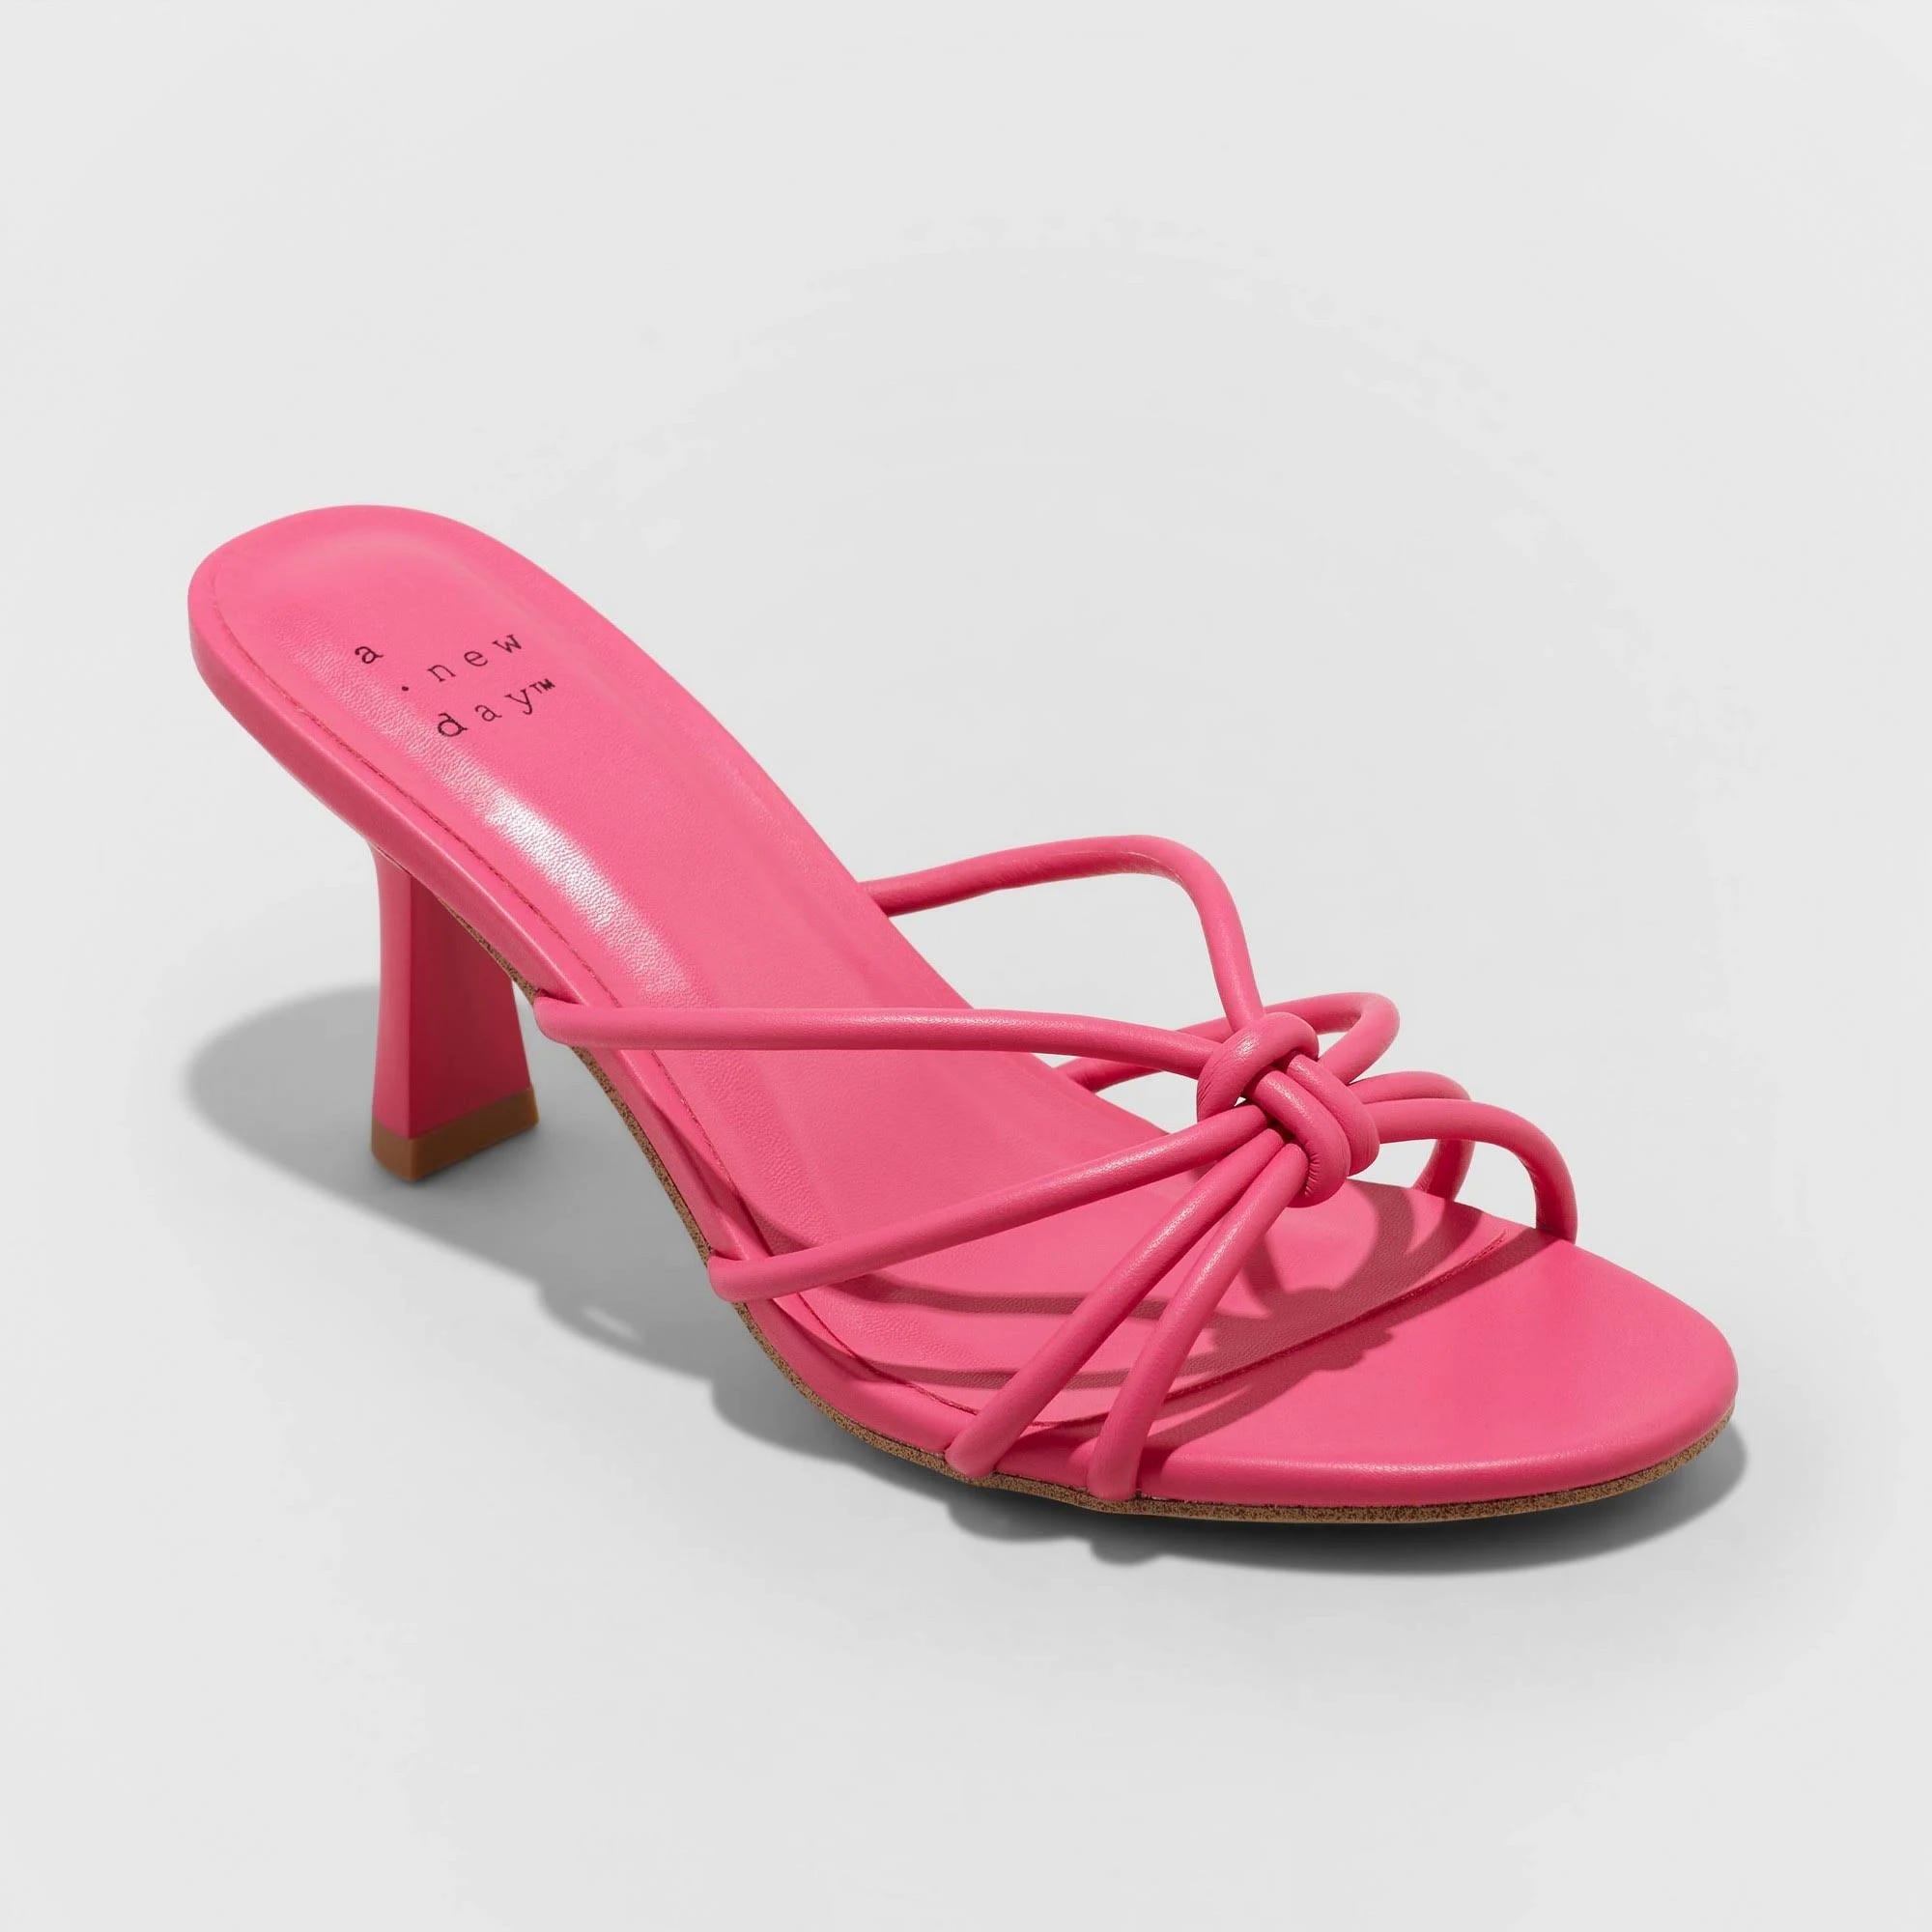 Hot Pink Lady Heels: Elegance and Comfort | Image